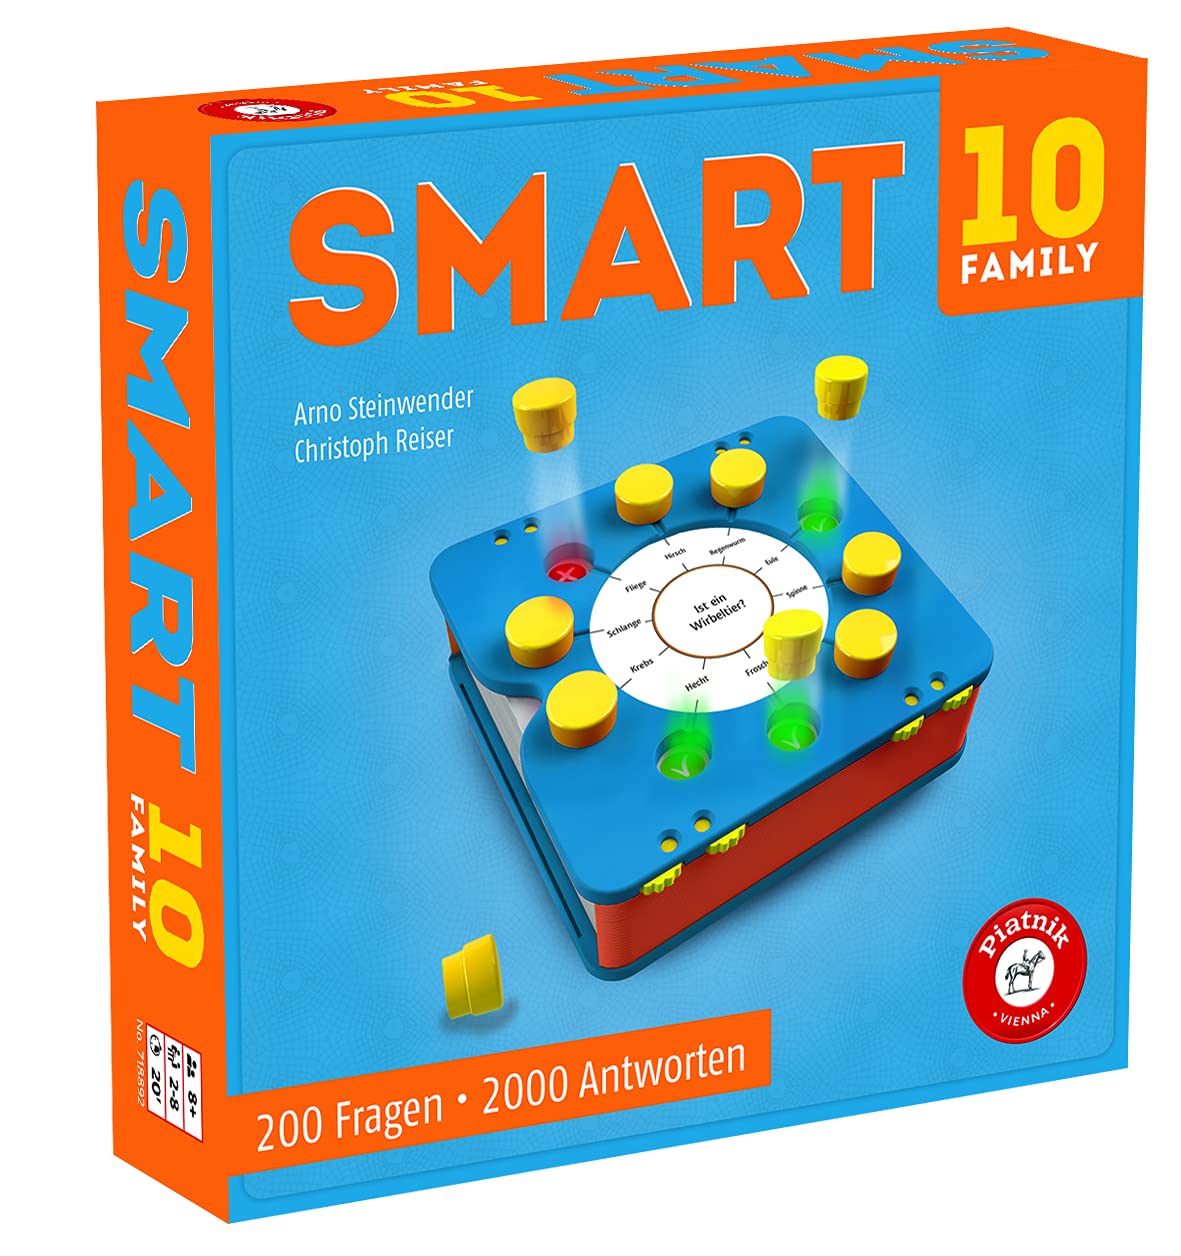 Piatnik PIA07188 Smart 10 Family | Das revolutionäre Alleswisser Brettspiel I besonderen Art Quizspiele, Bunt